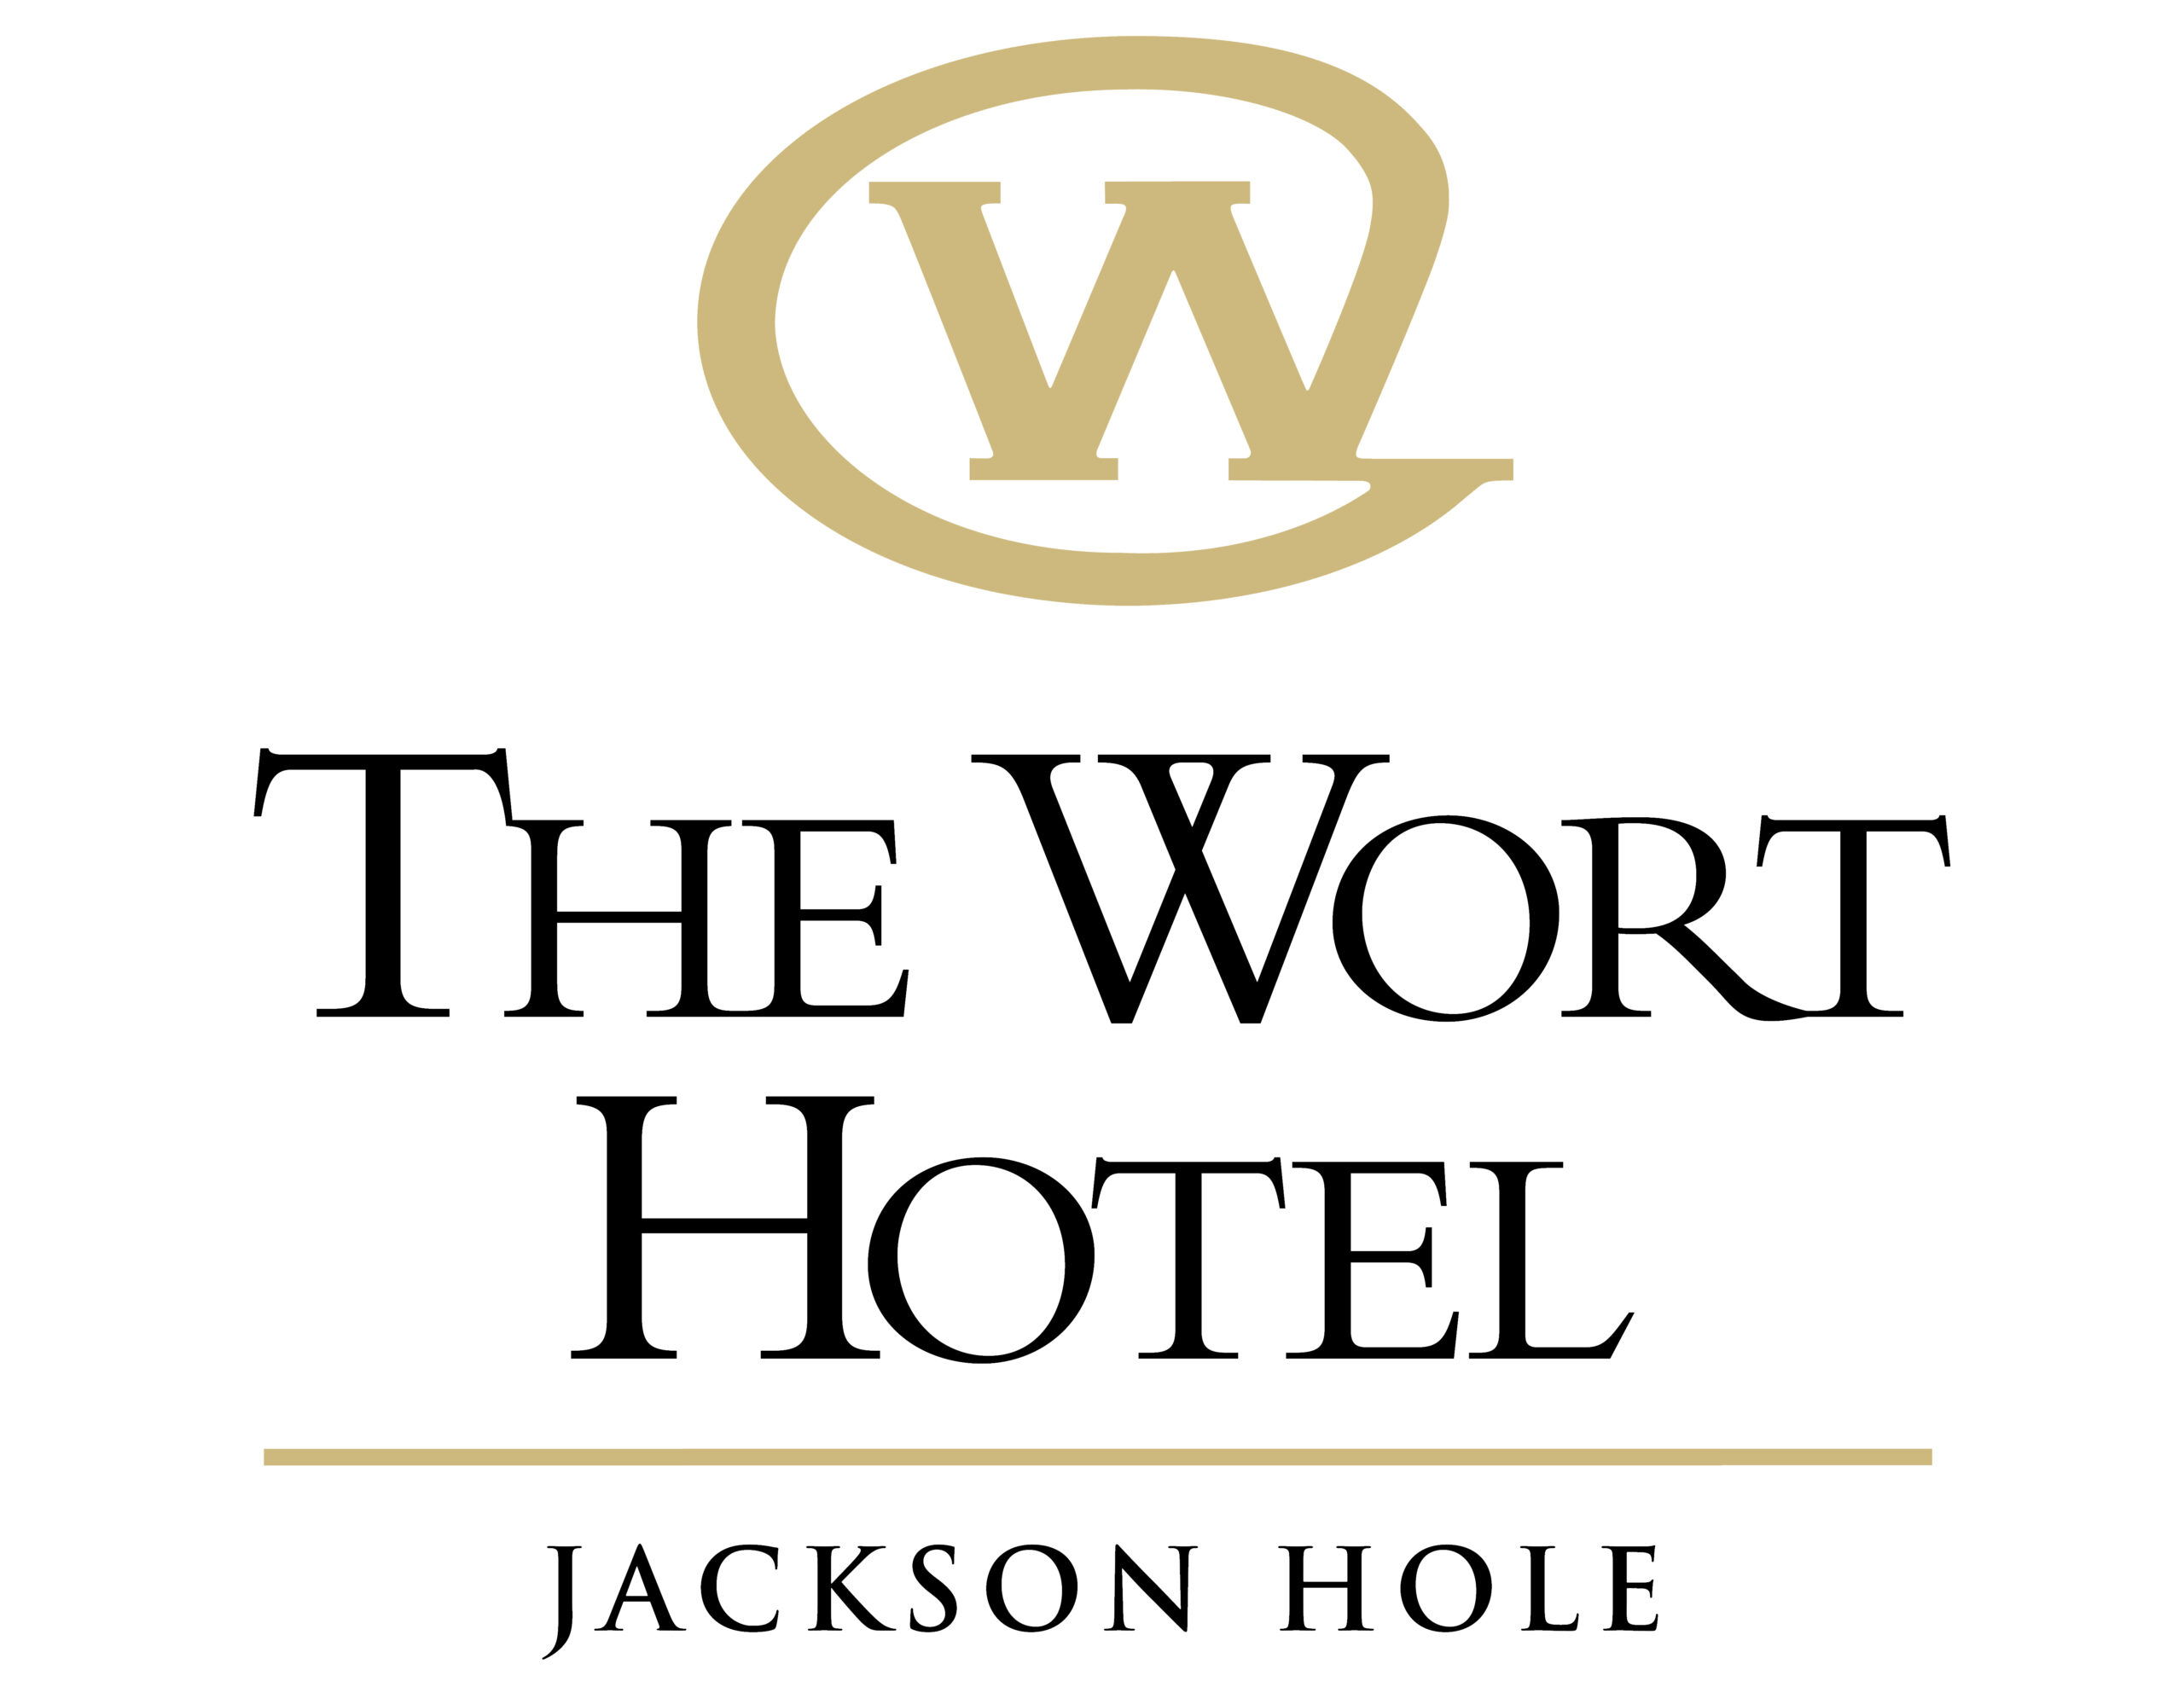 The Wort Hotel